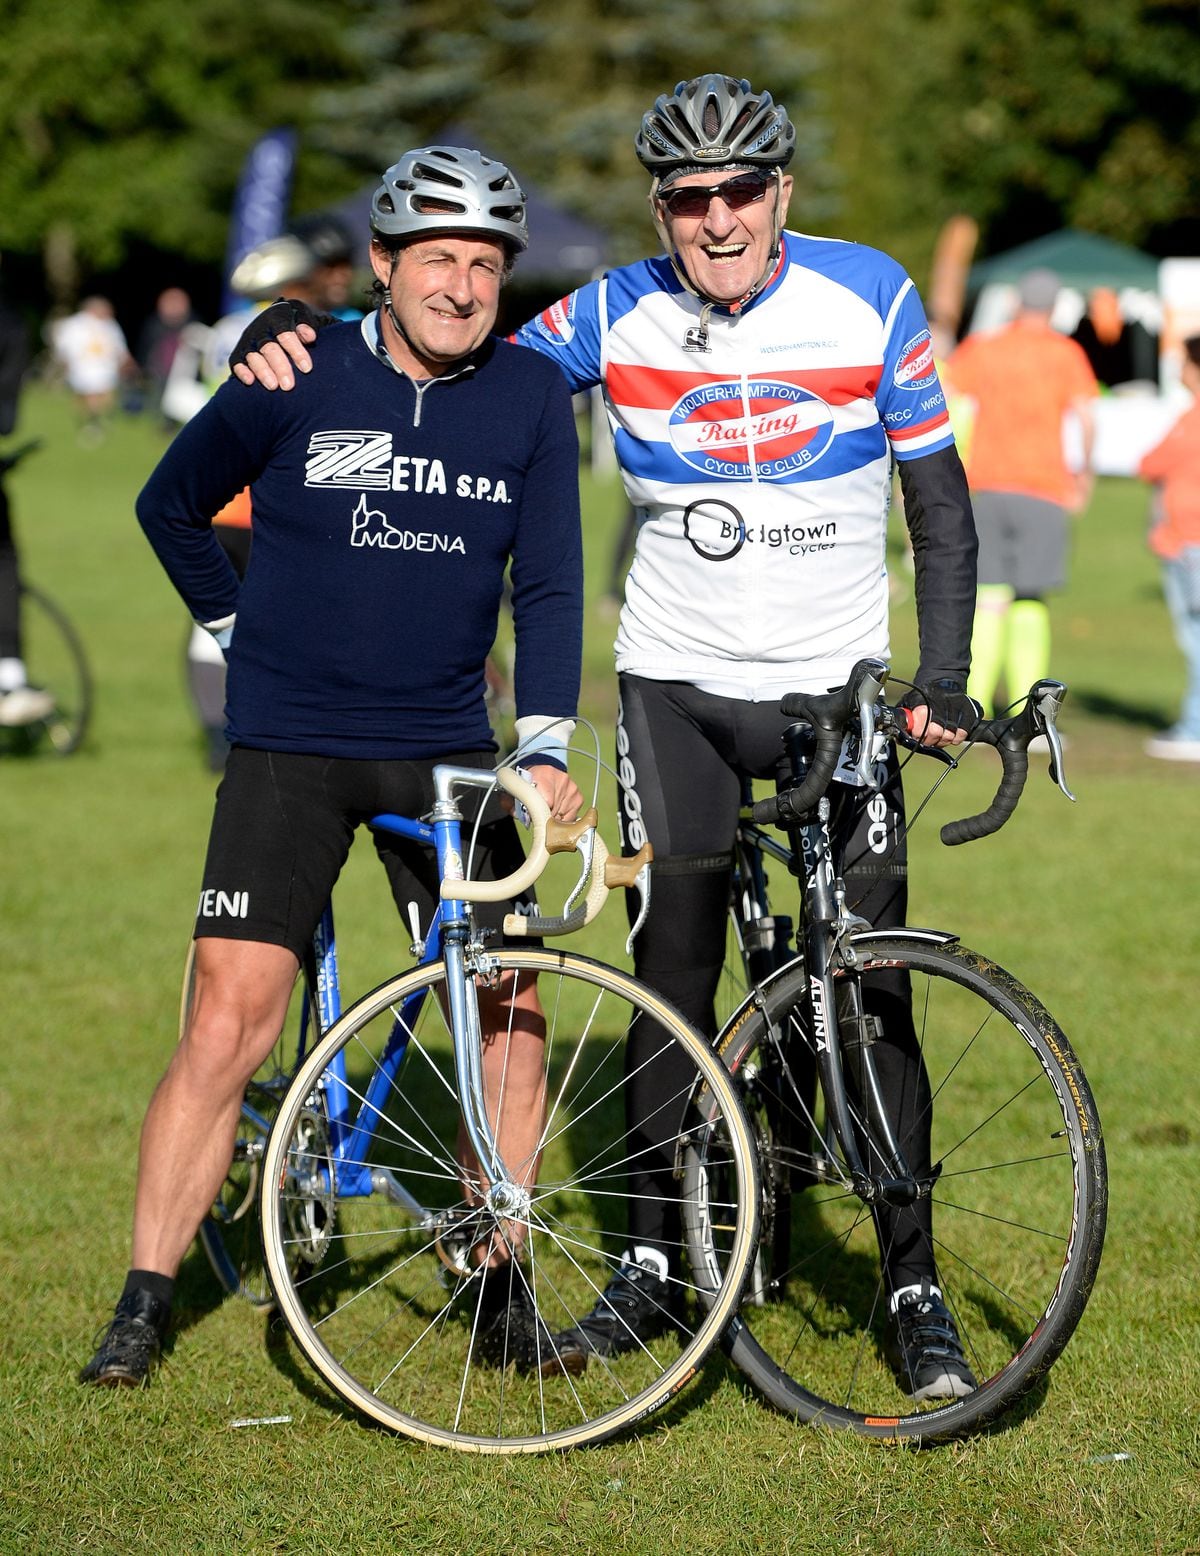 Hugh Porter with Danny McDermott, who was riding a bike circa 1980s